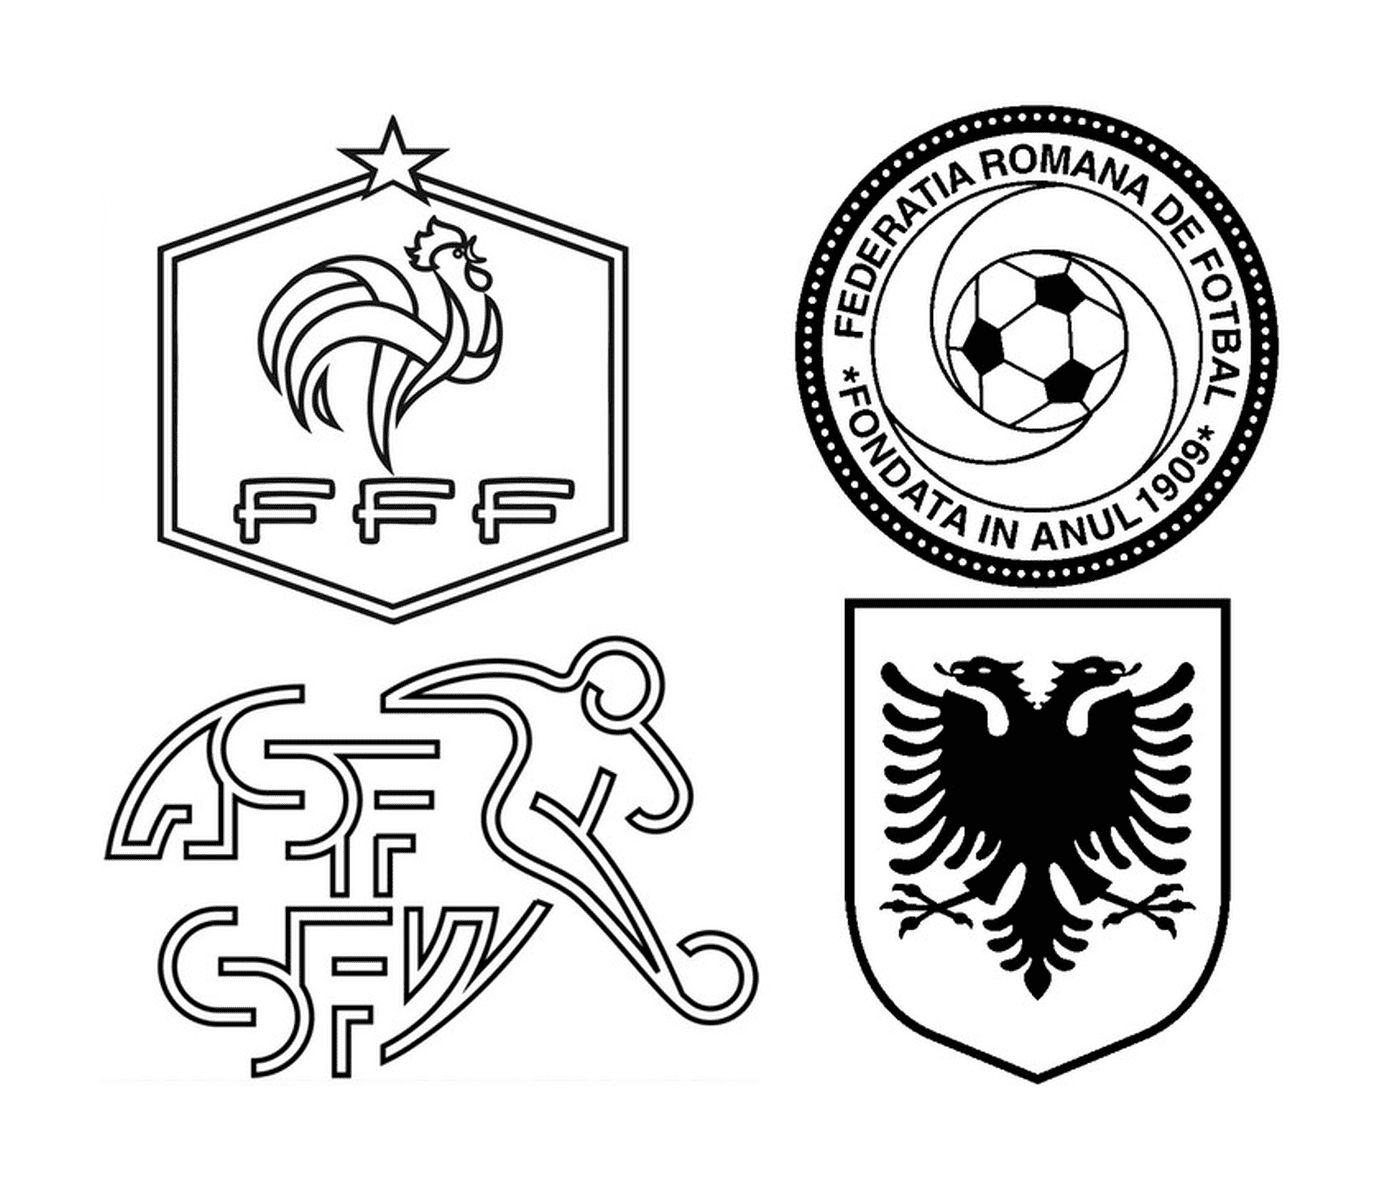  The logos of four football teams 